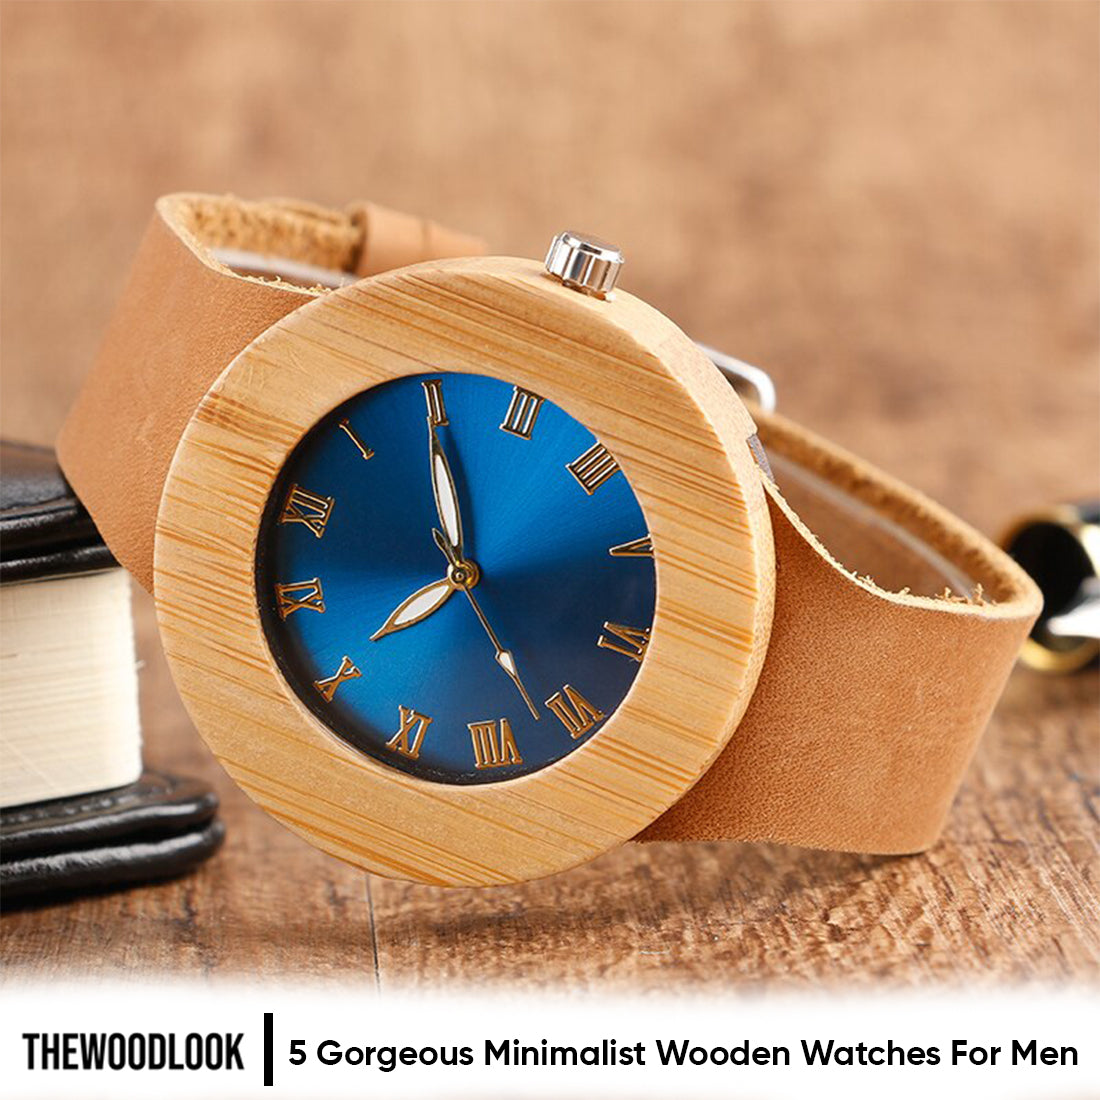 5 Gorgeous Minimalist Wooden Watches for Men